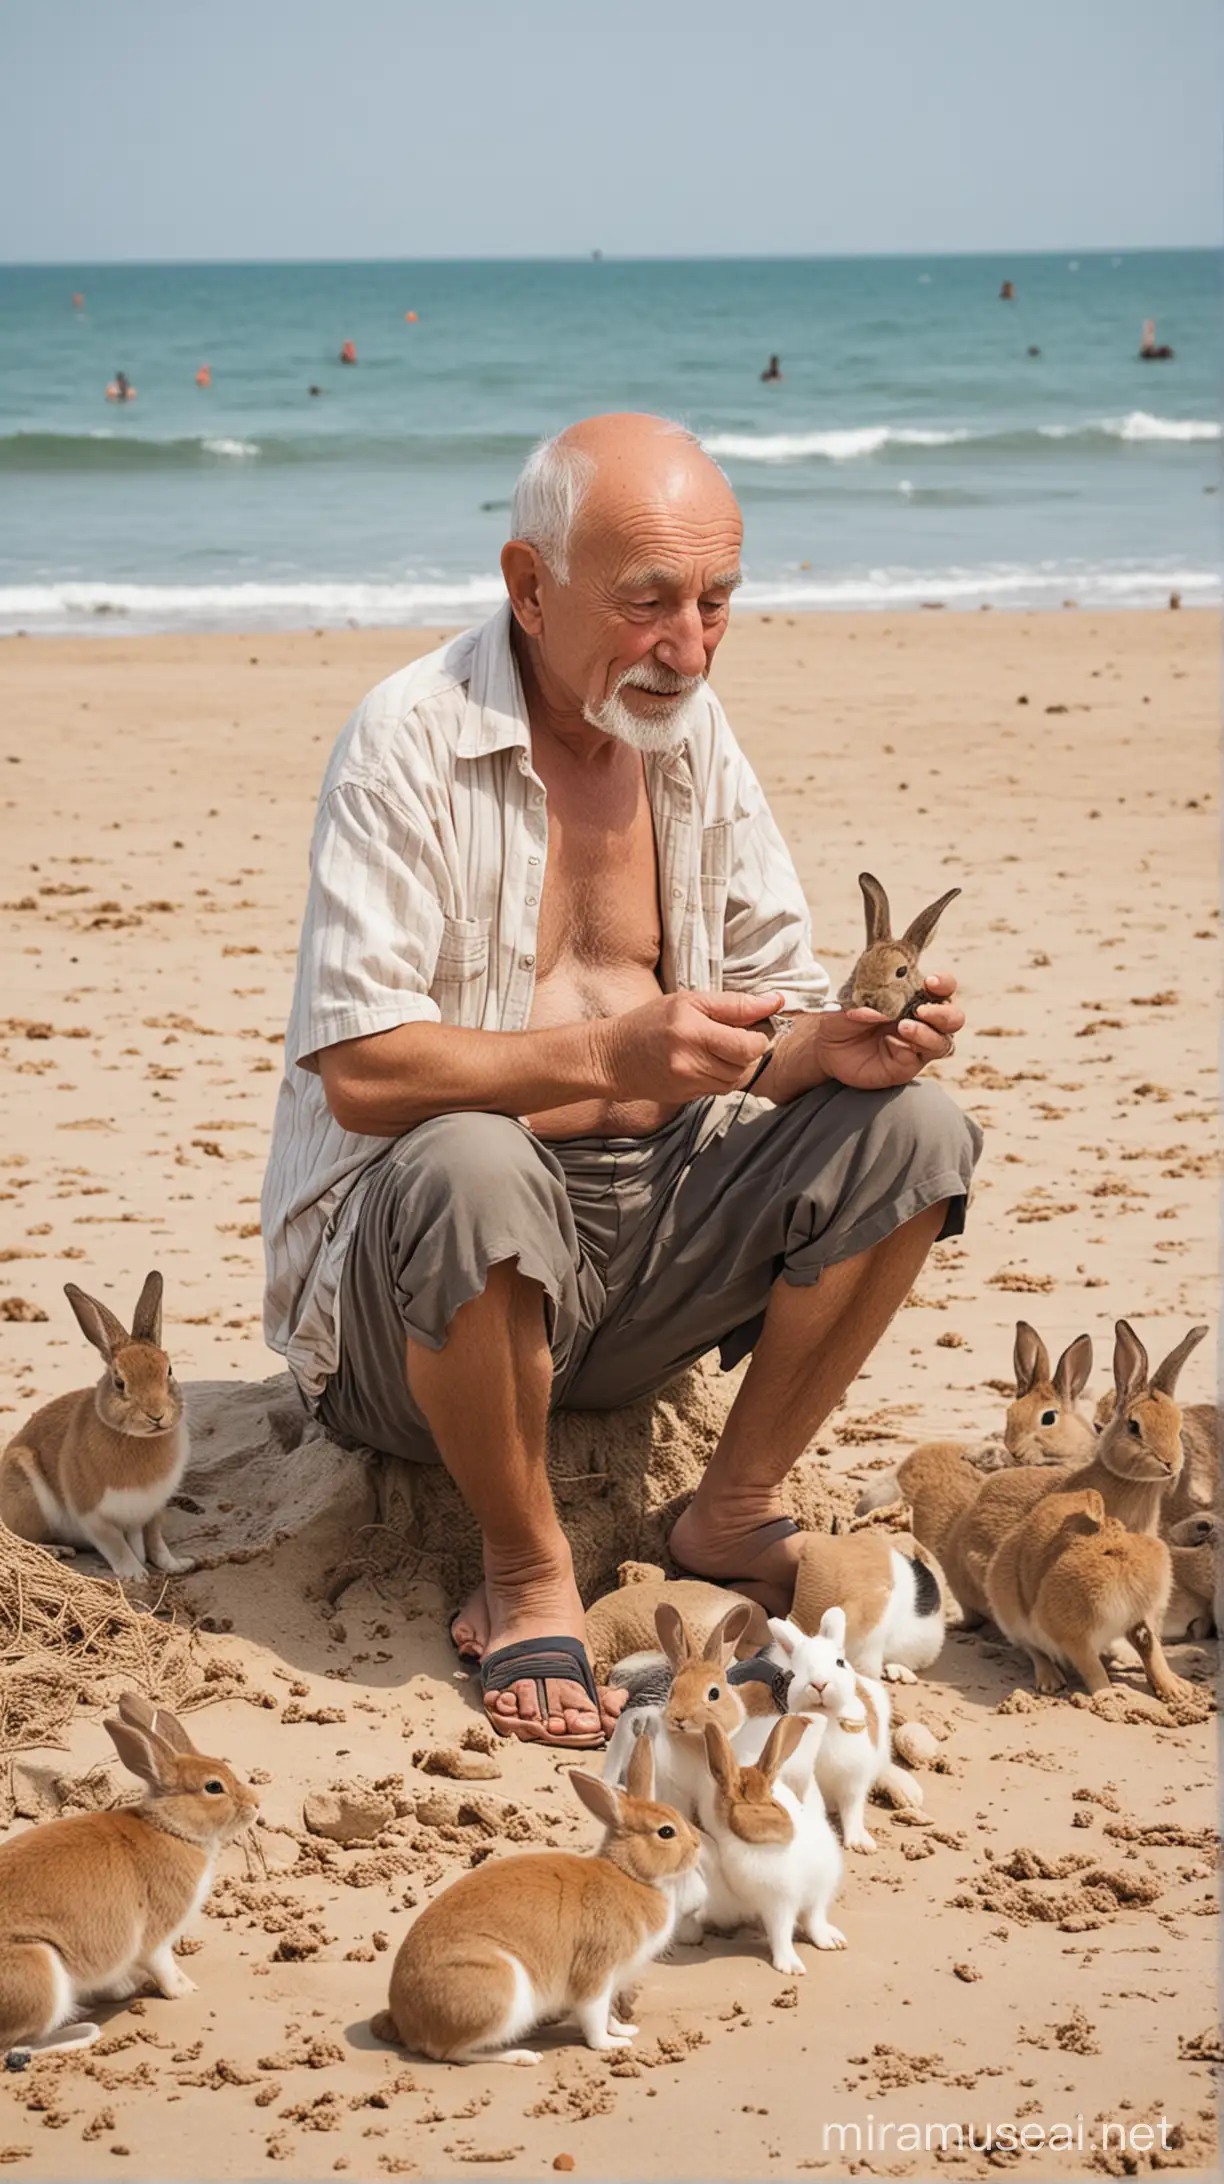 Elderly Gentleman Enjoying Serene Beach Moments with Playful Rabbits